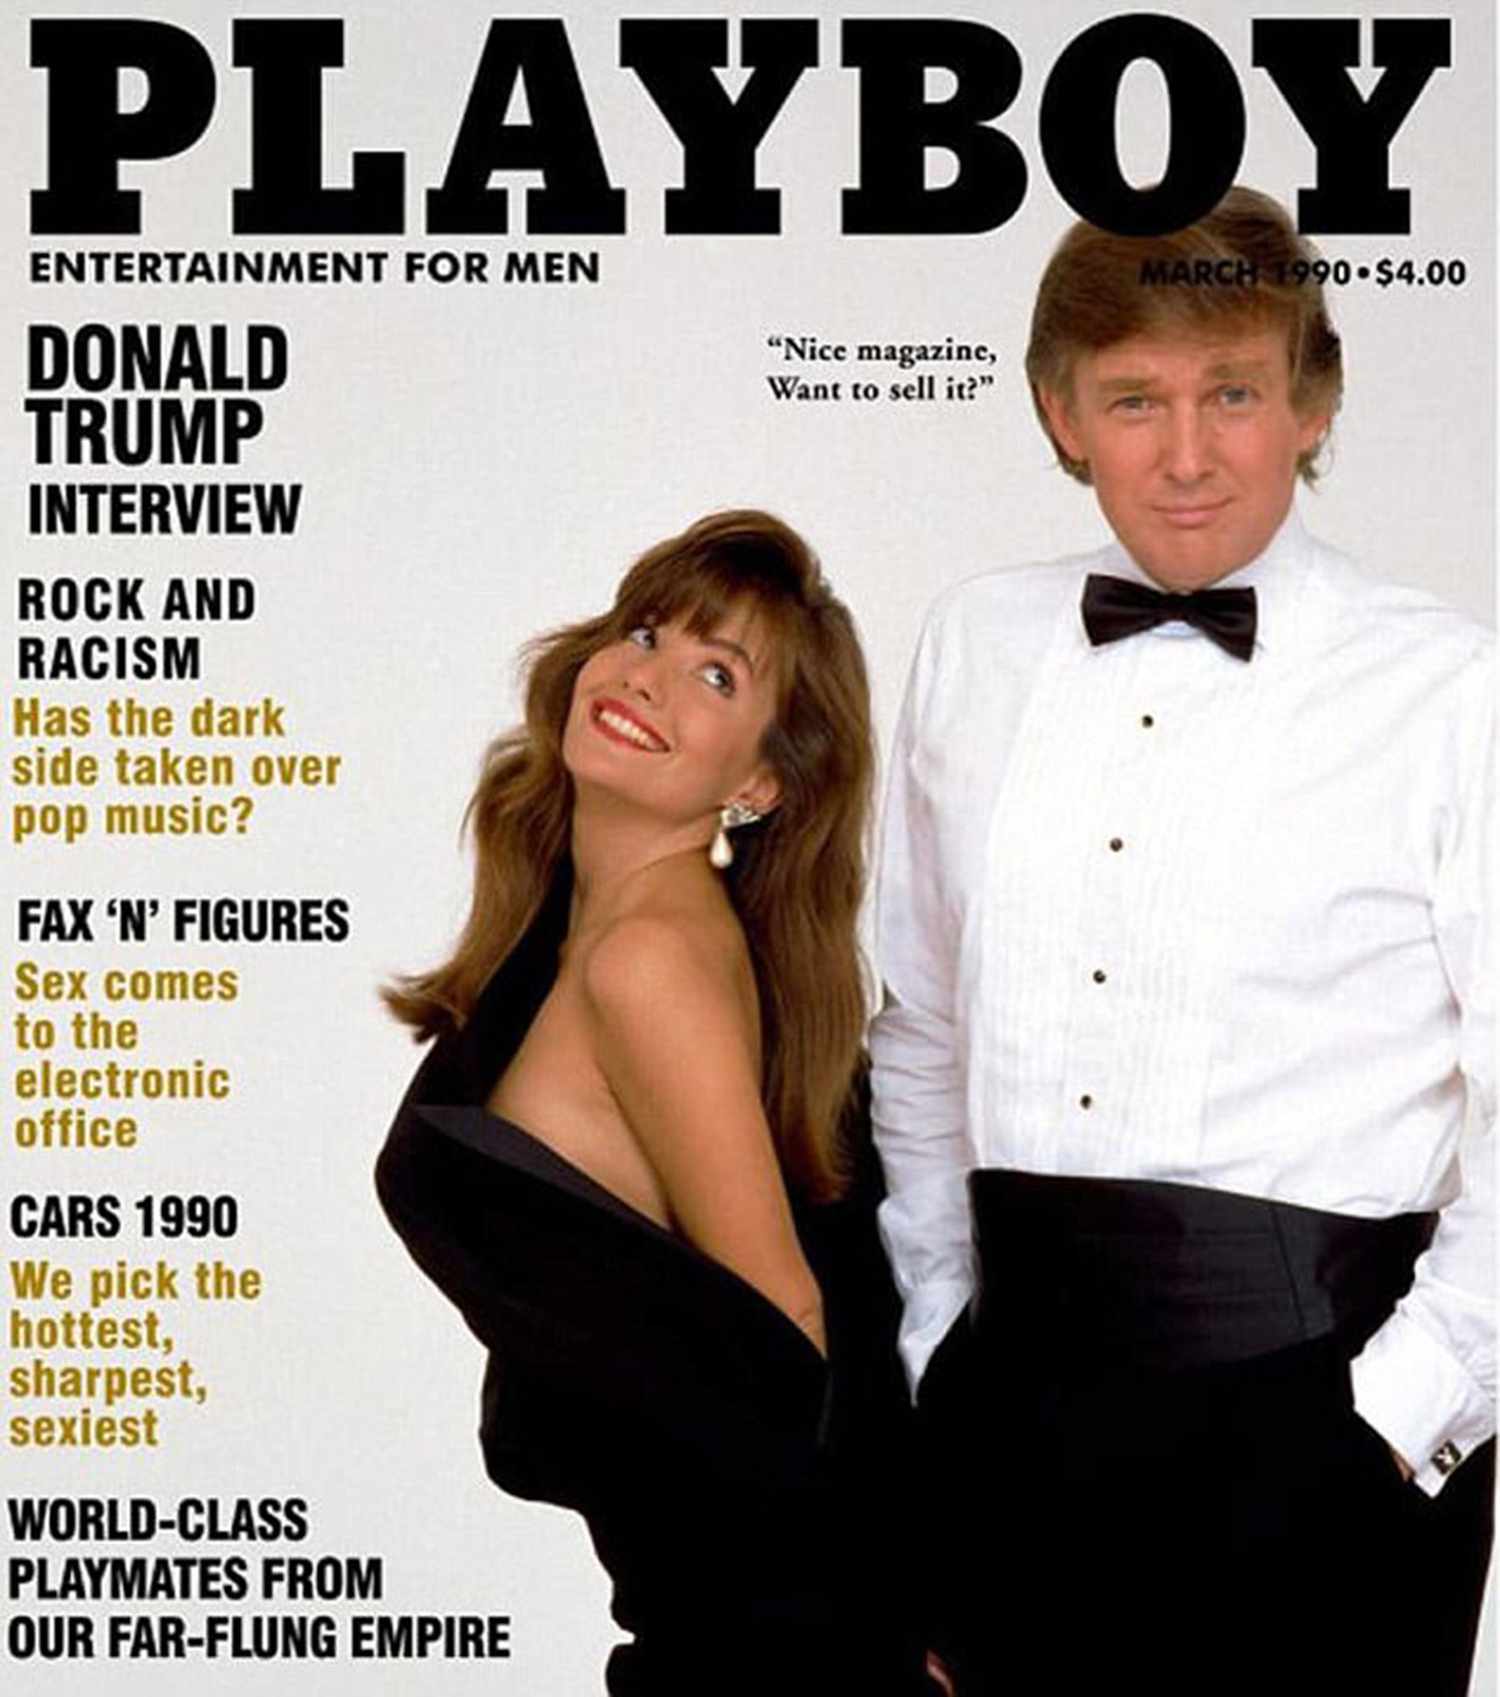 dj dodson recommends Playboy Photos Of Melania Trump